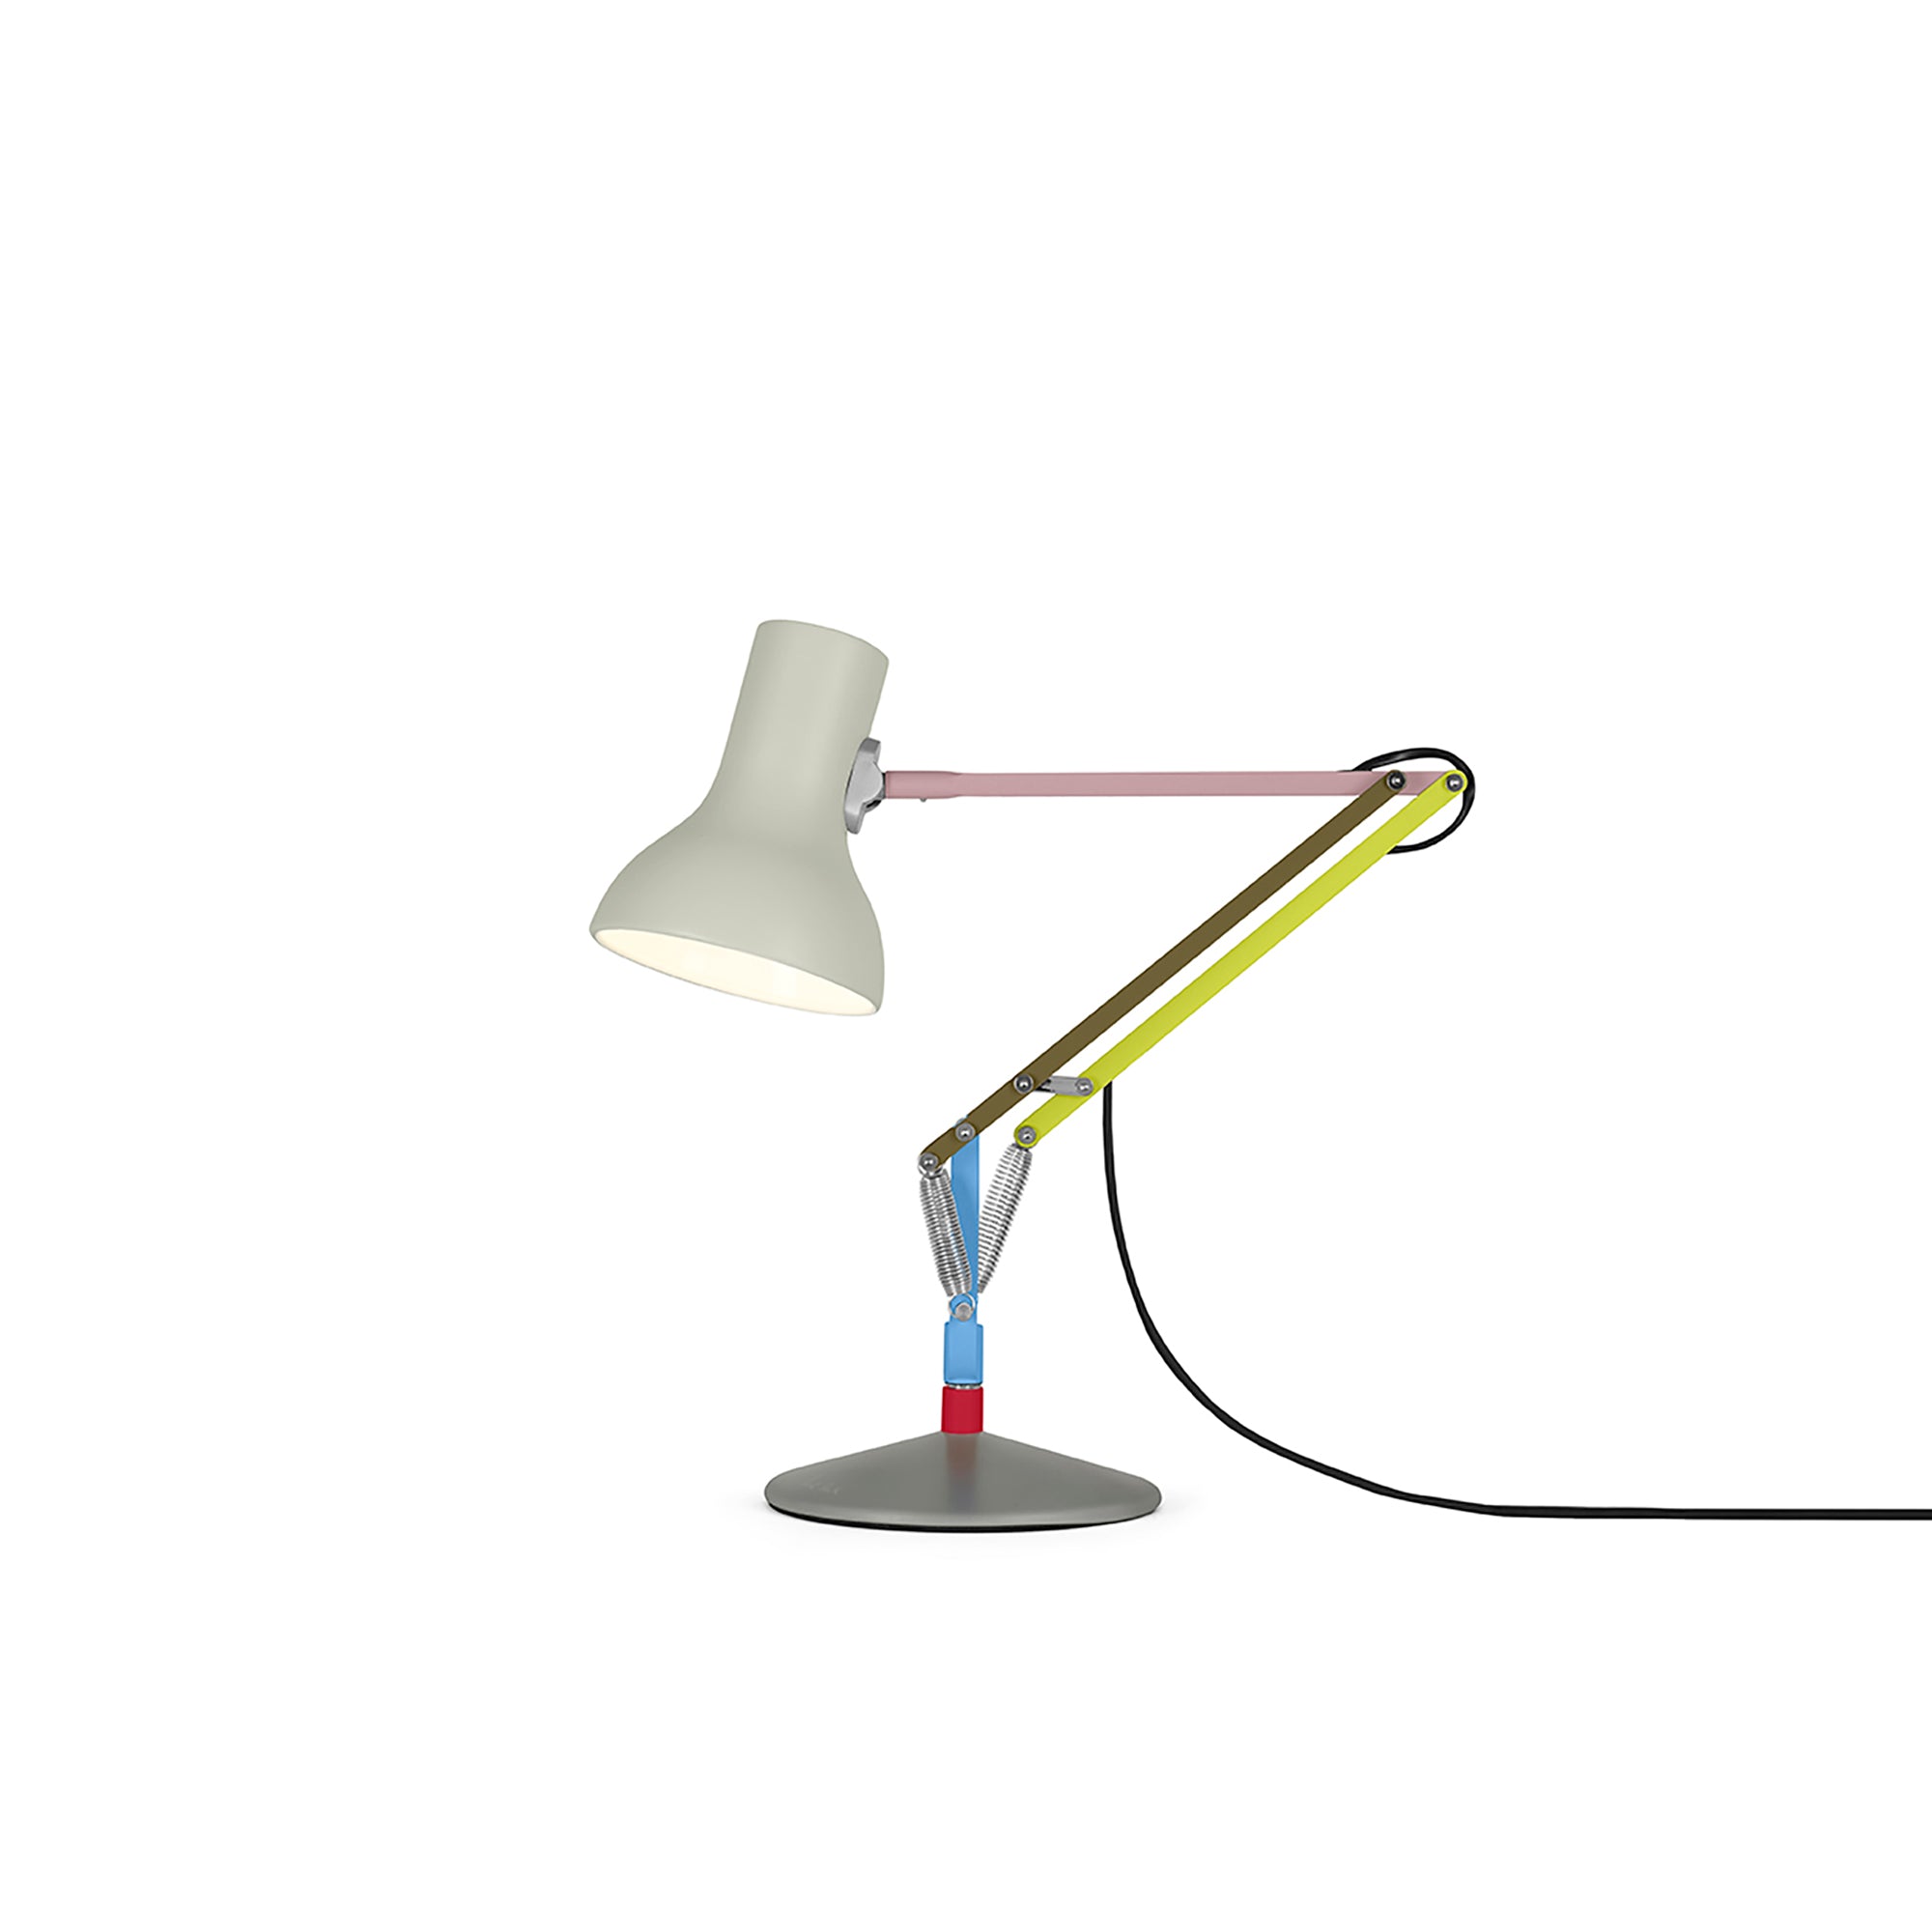 Type 75 Mini Desk Lamp: Paul Smith Edition One